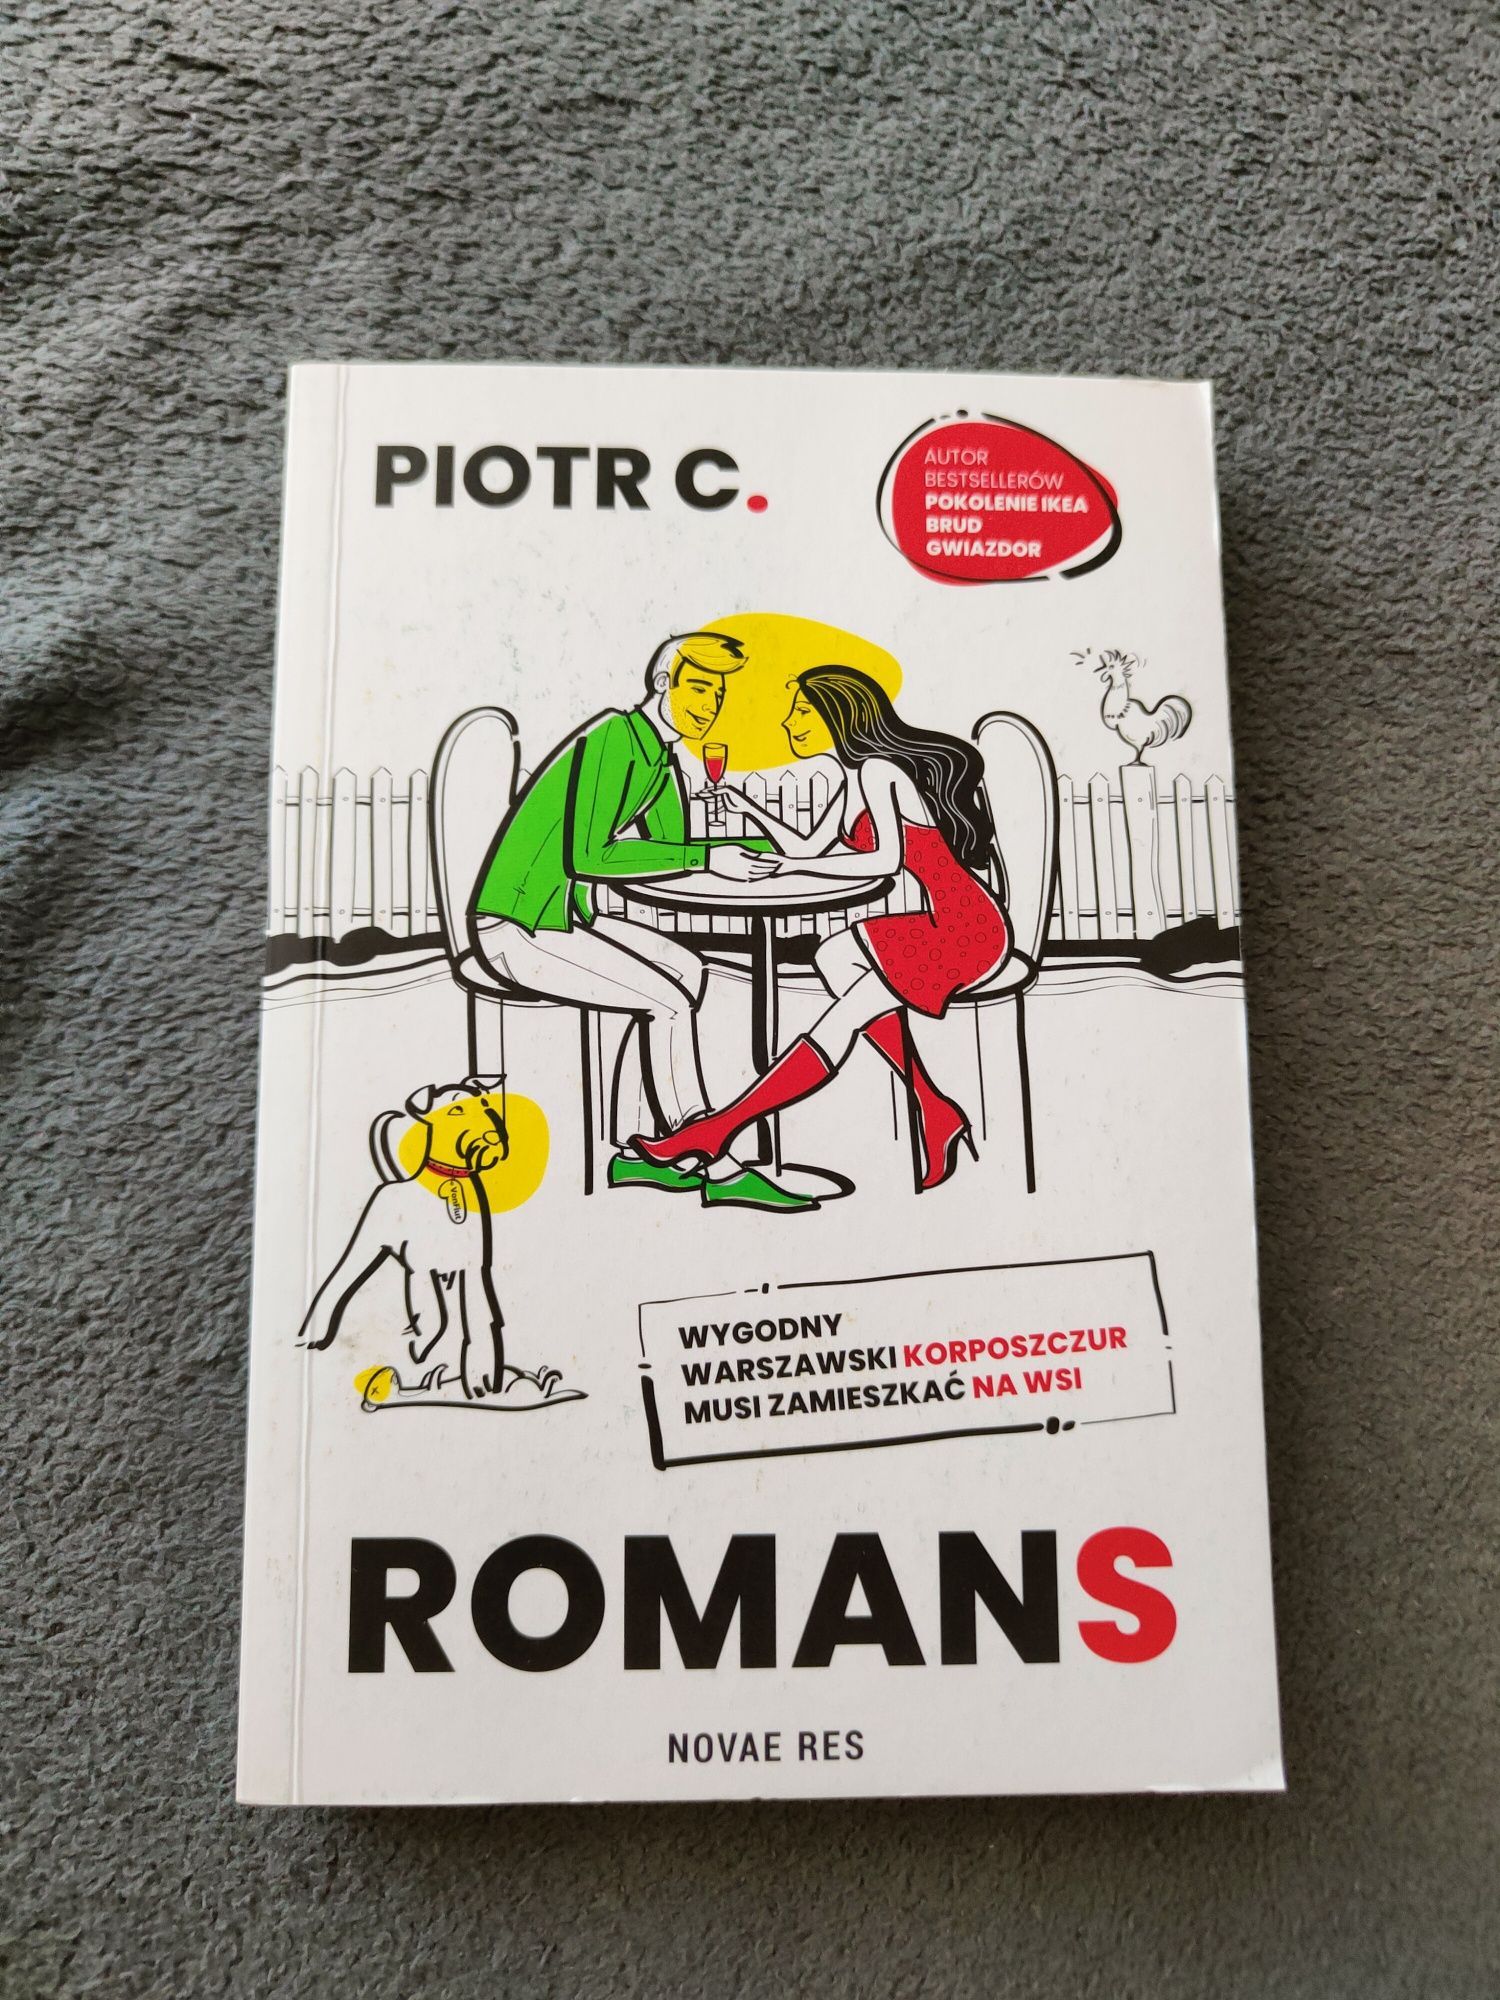 Romans Piotr C. Pokolenie Ikea